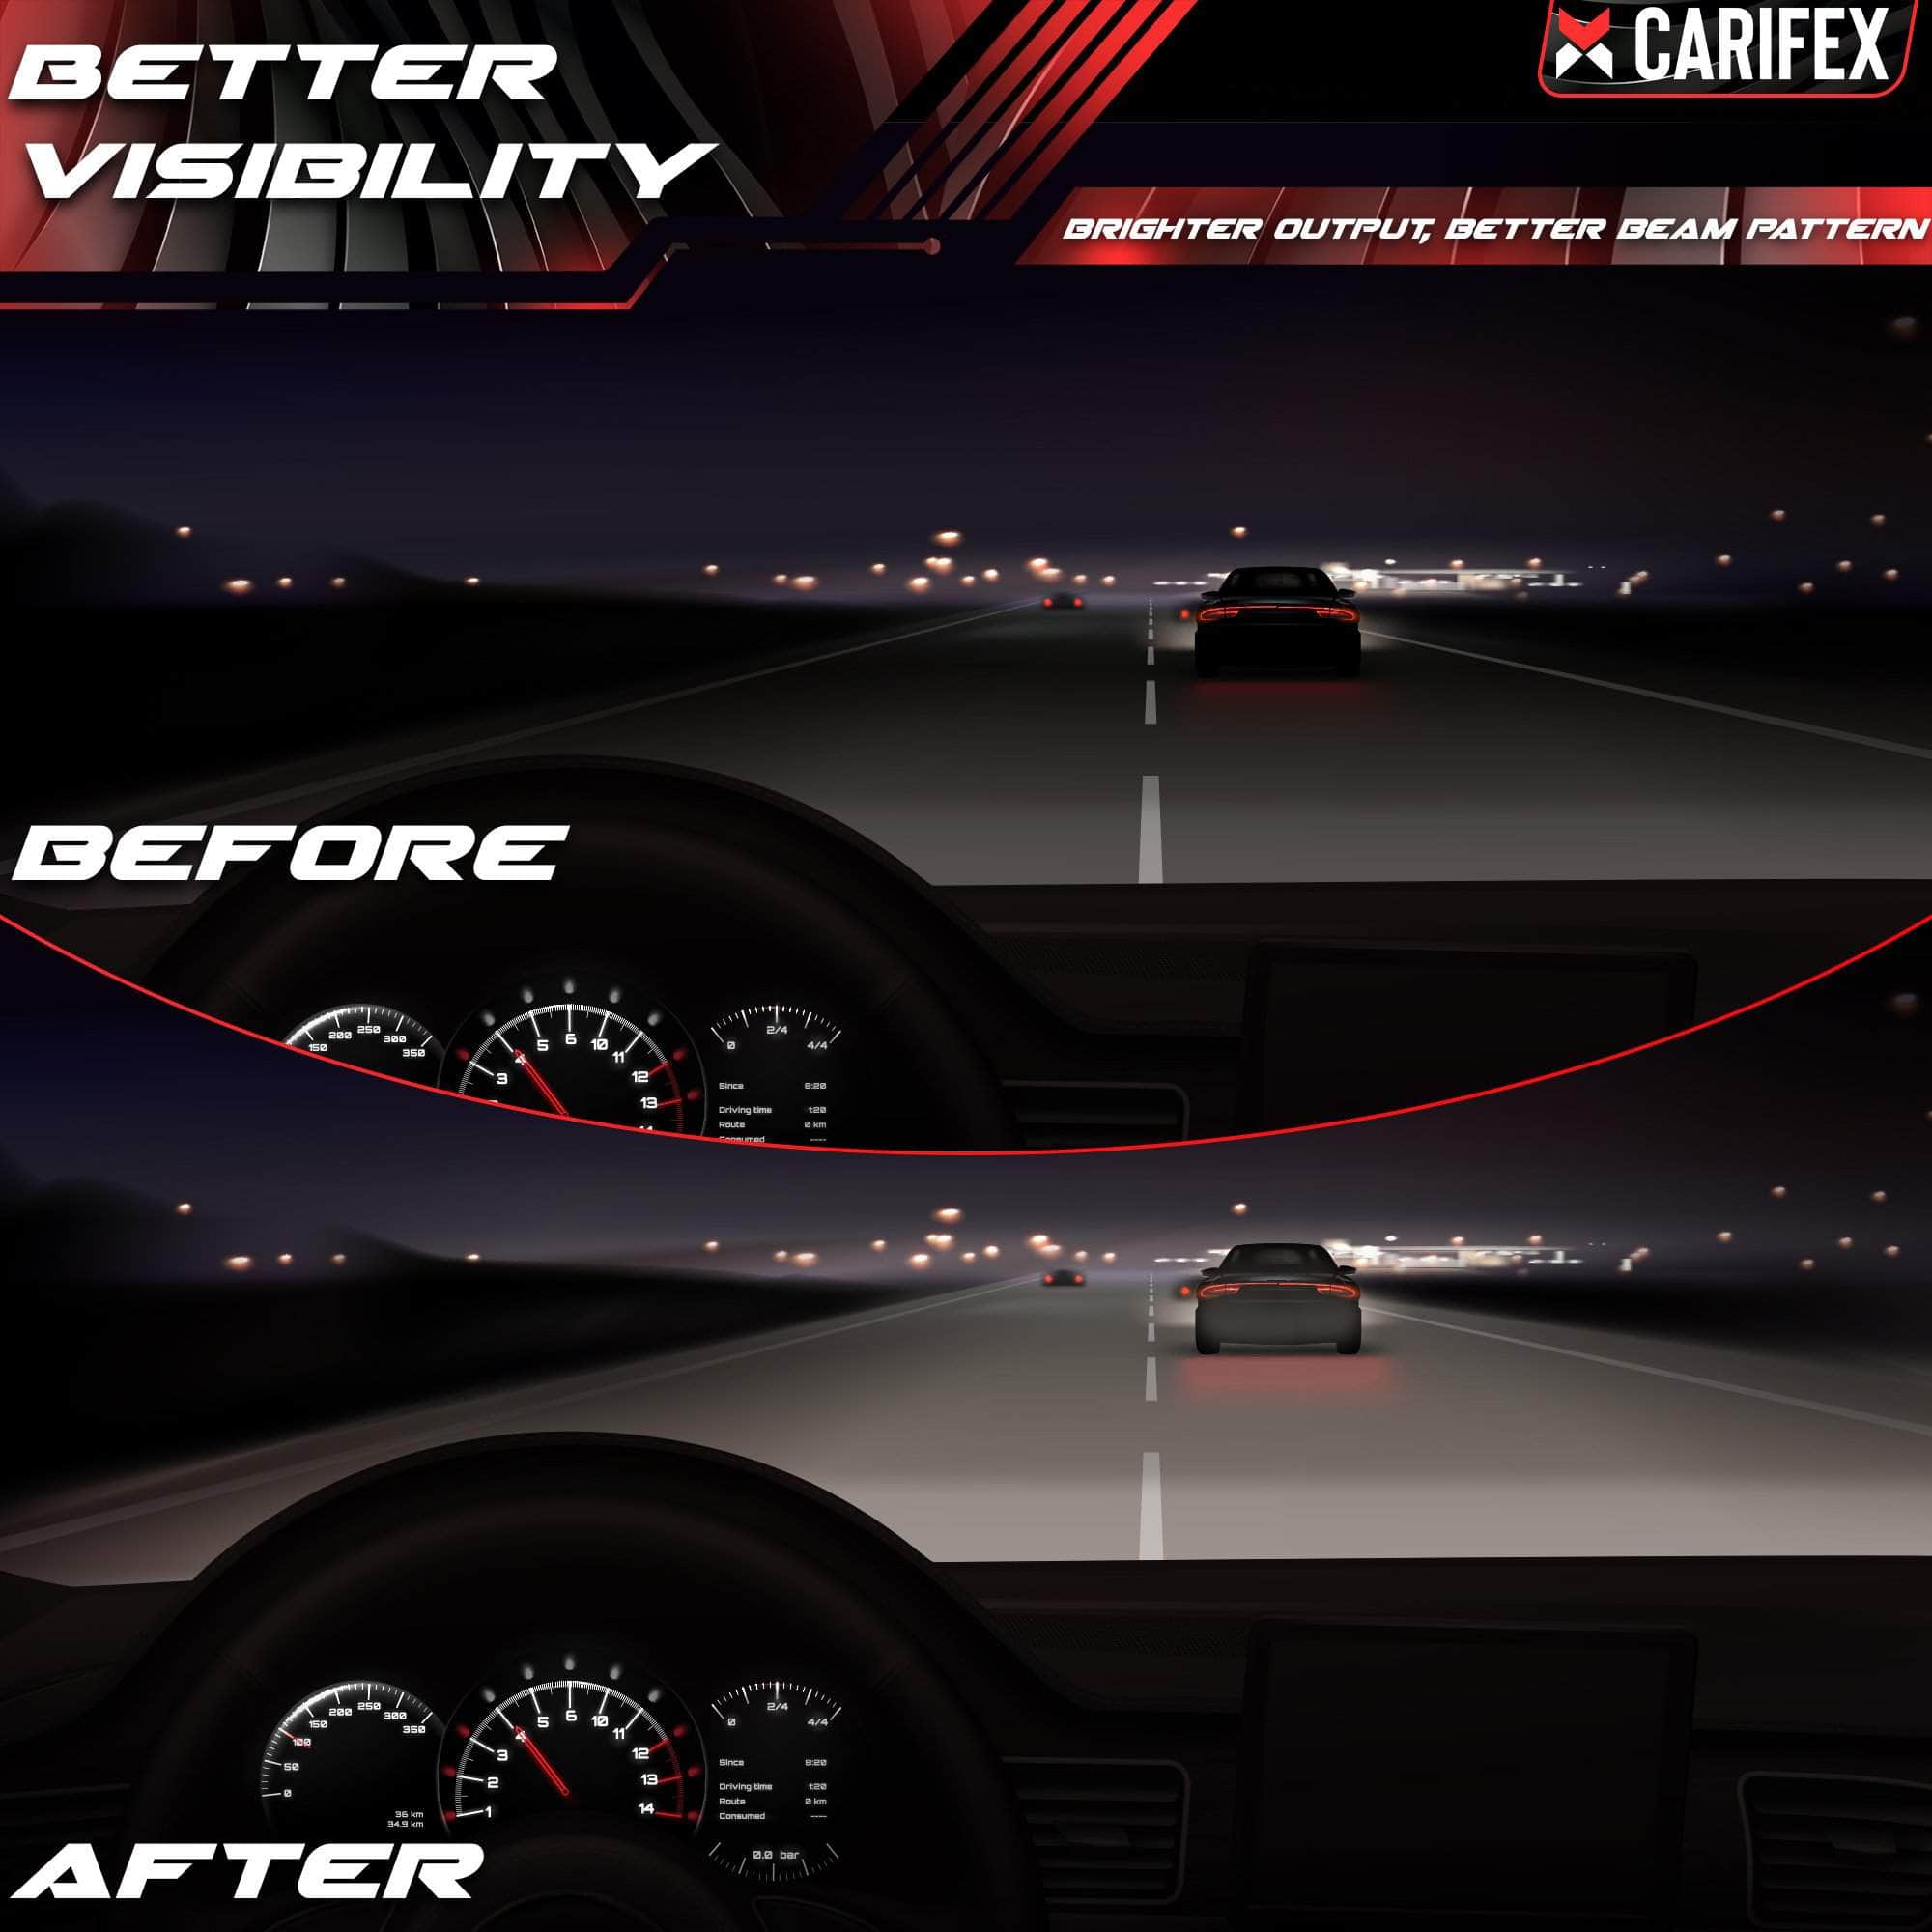 Carifex headlights bulb Compact LED Headlight - H7